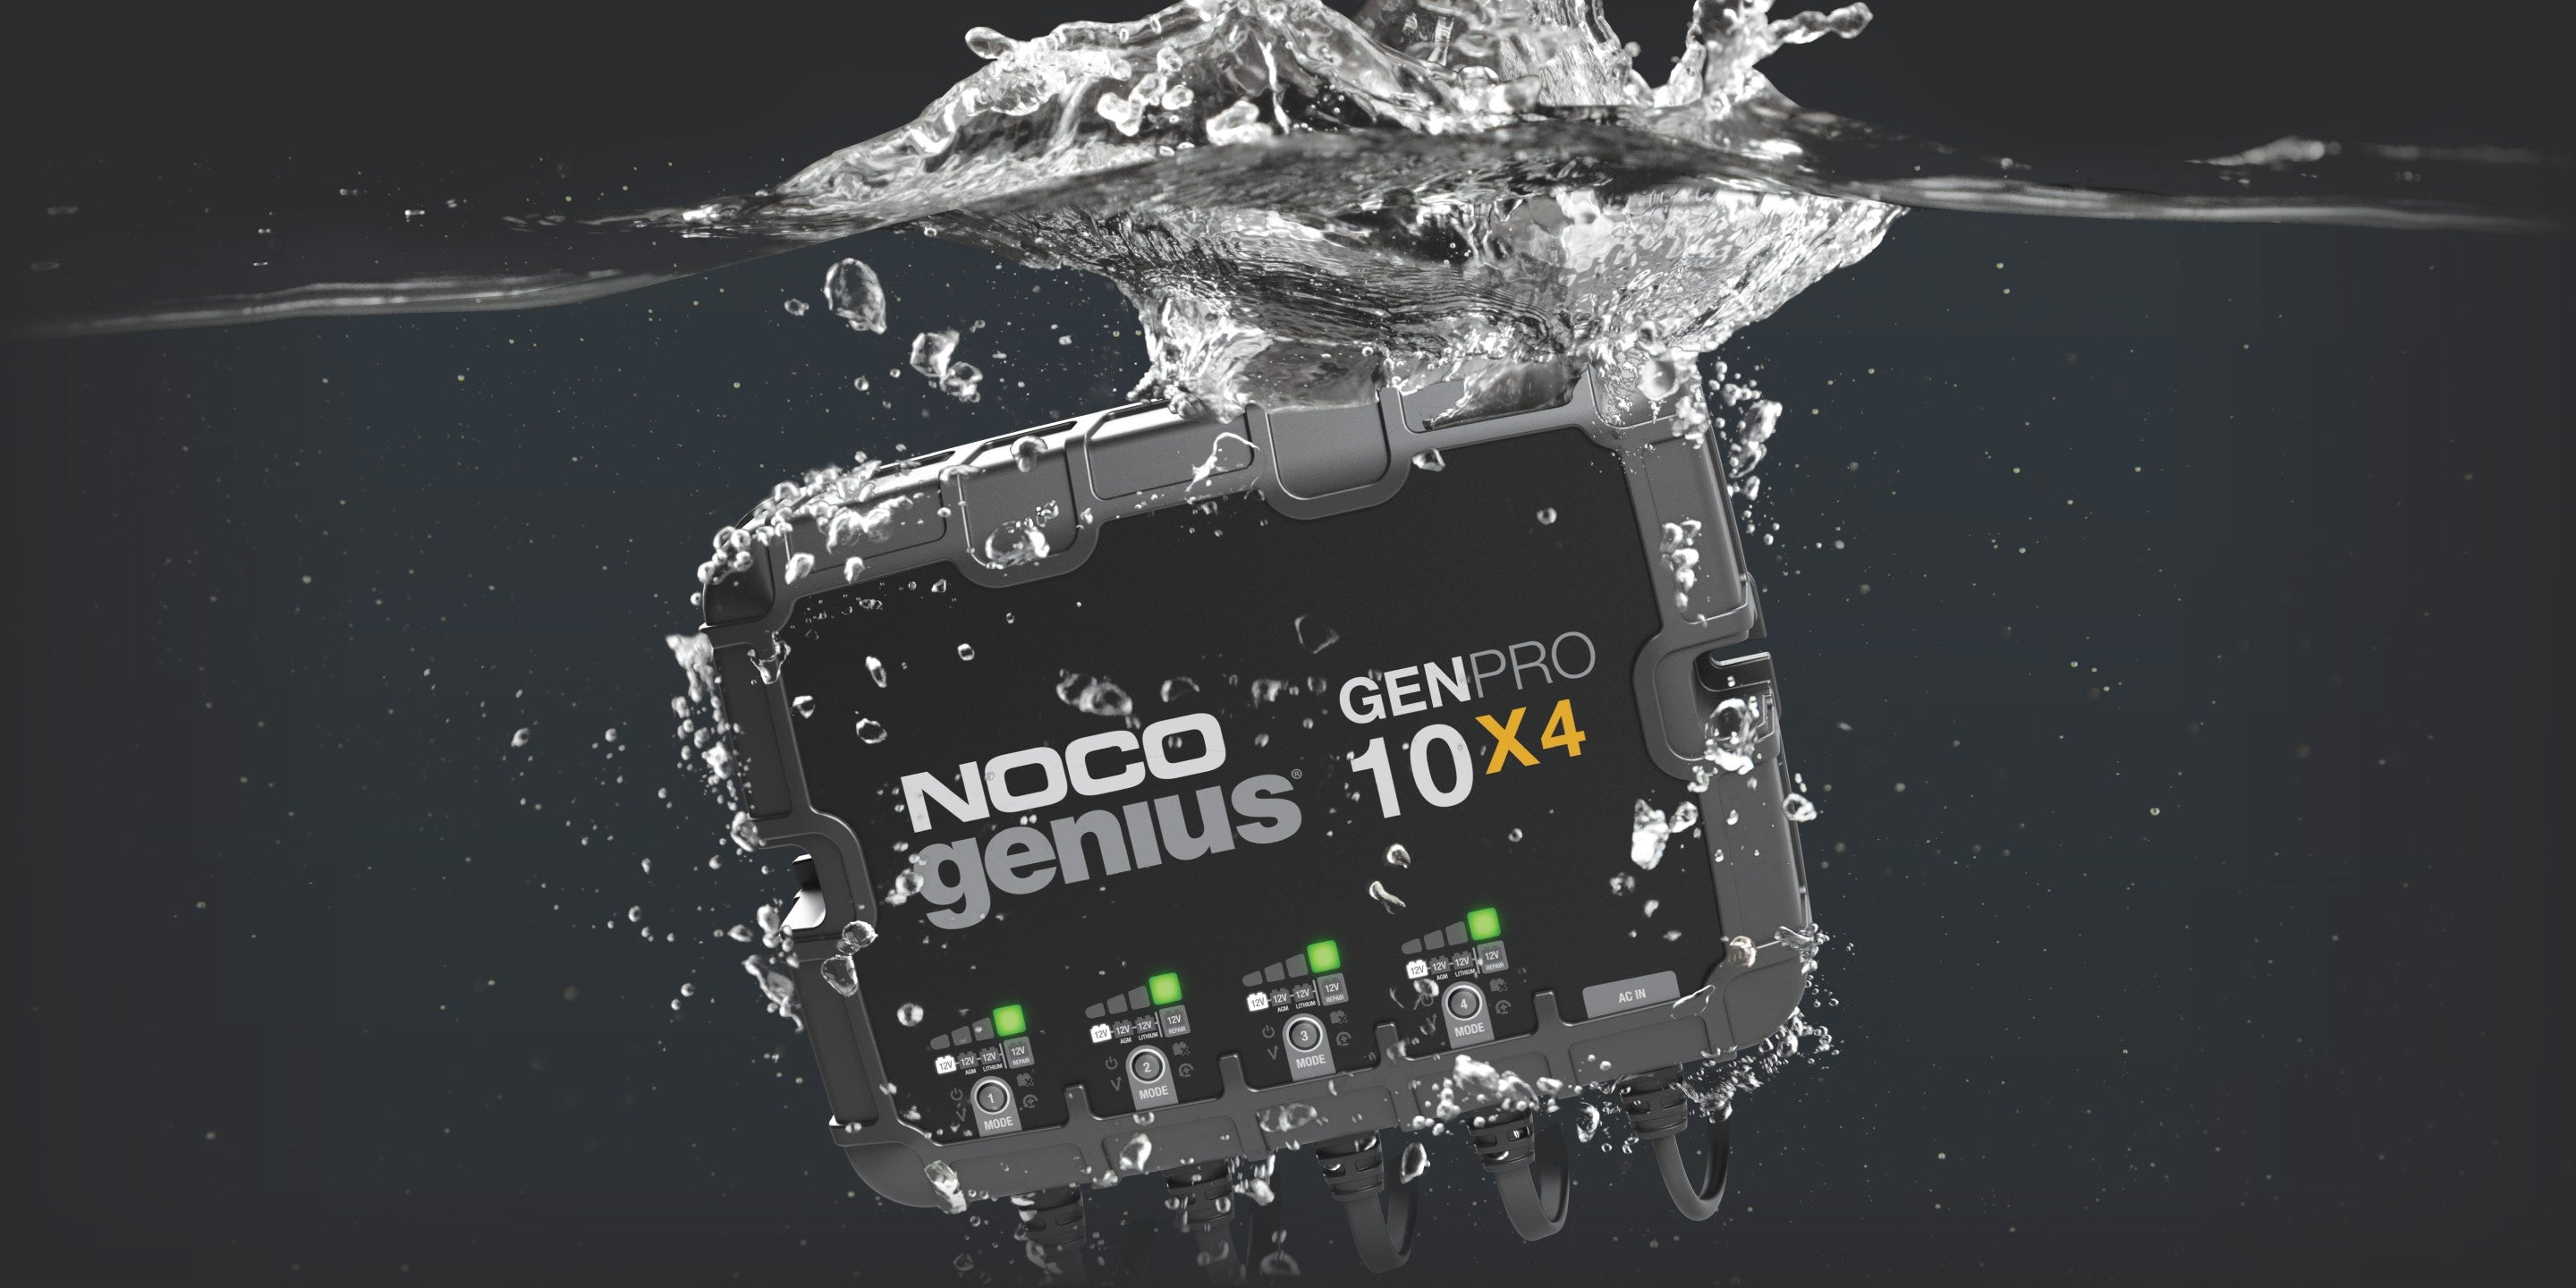 NOCO GENPRO10X4 12 Volt, 40 Amp Genius 4 Bank Battery Charger